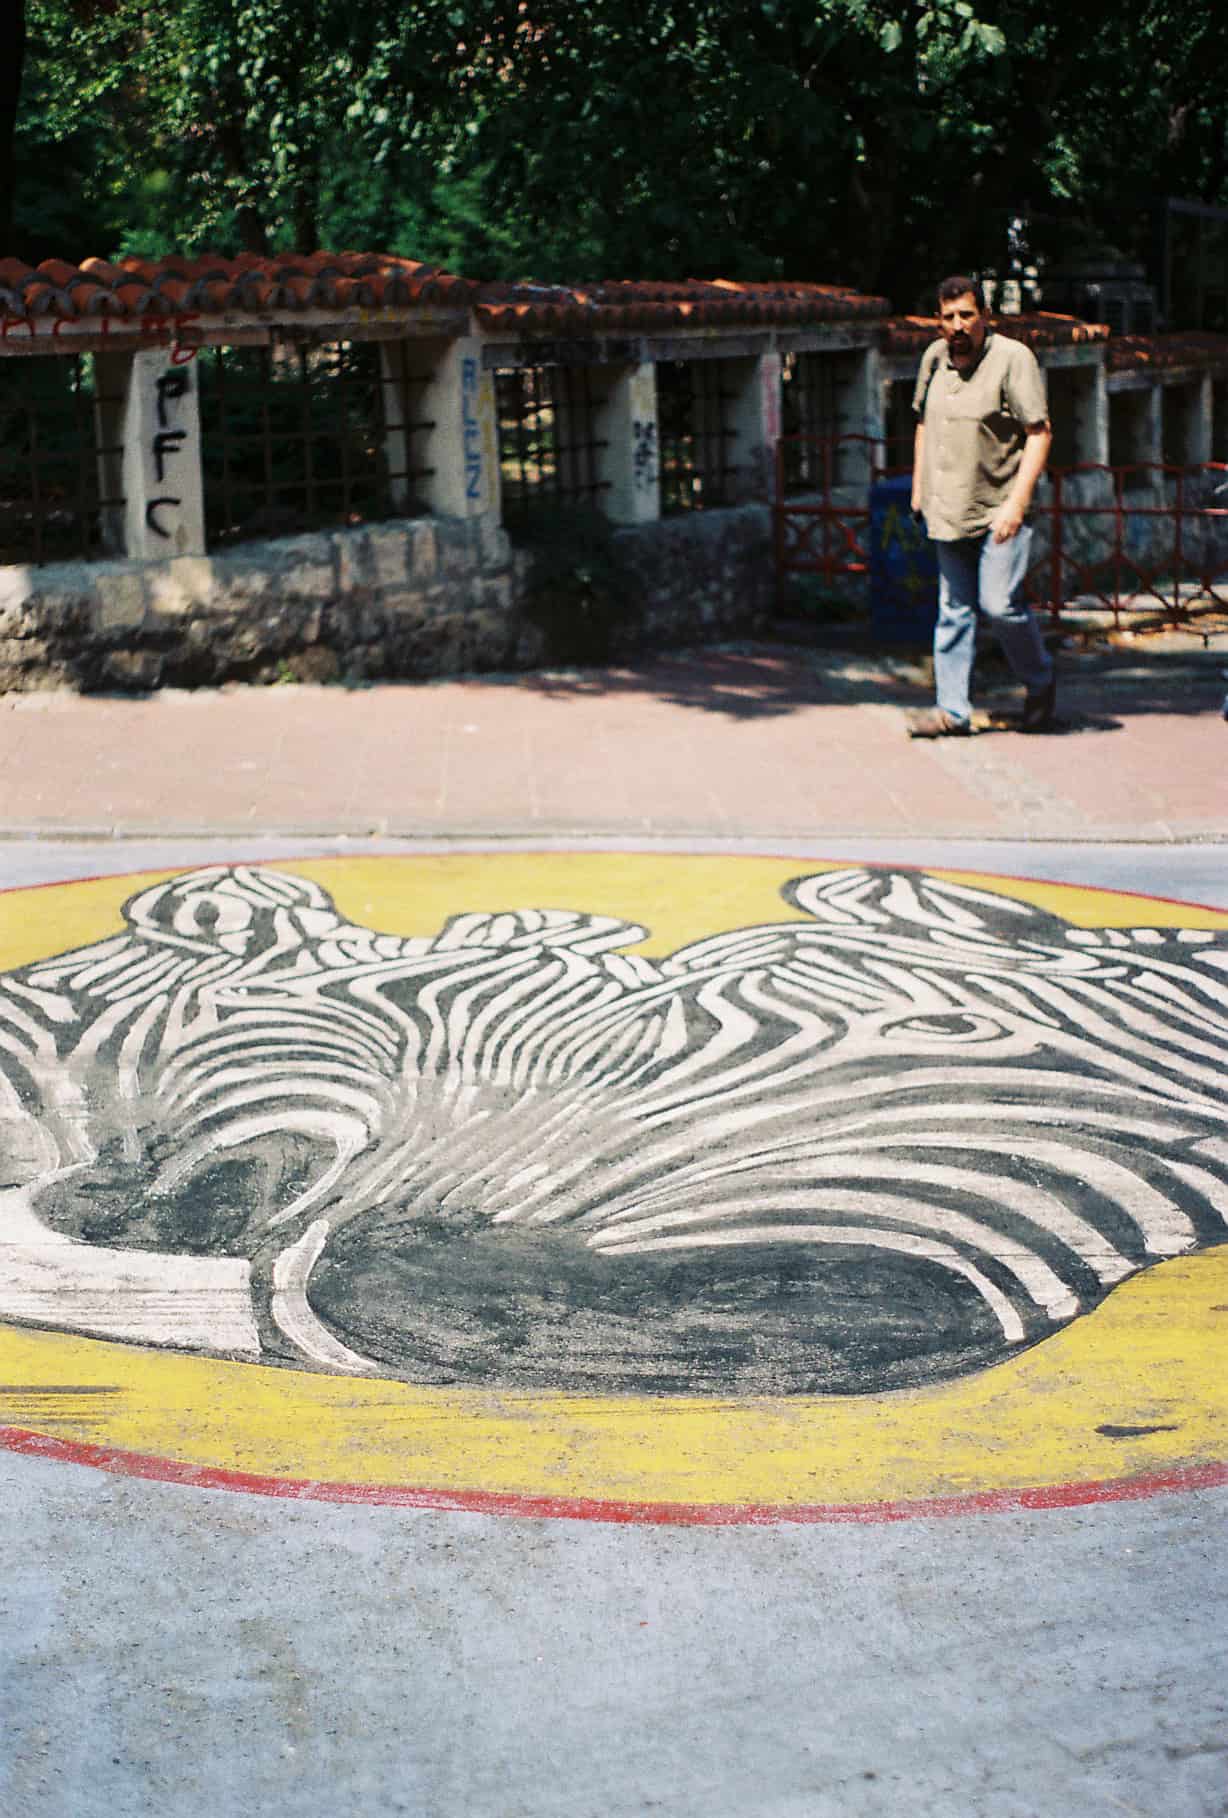 A real zebra-crossing!